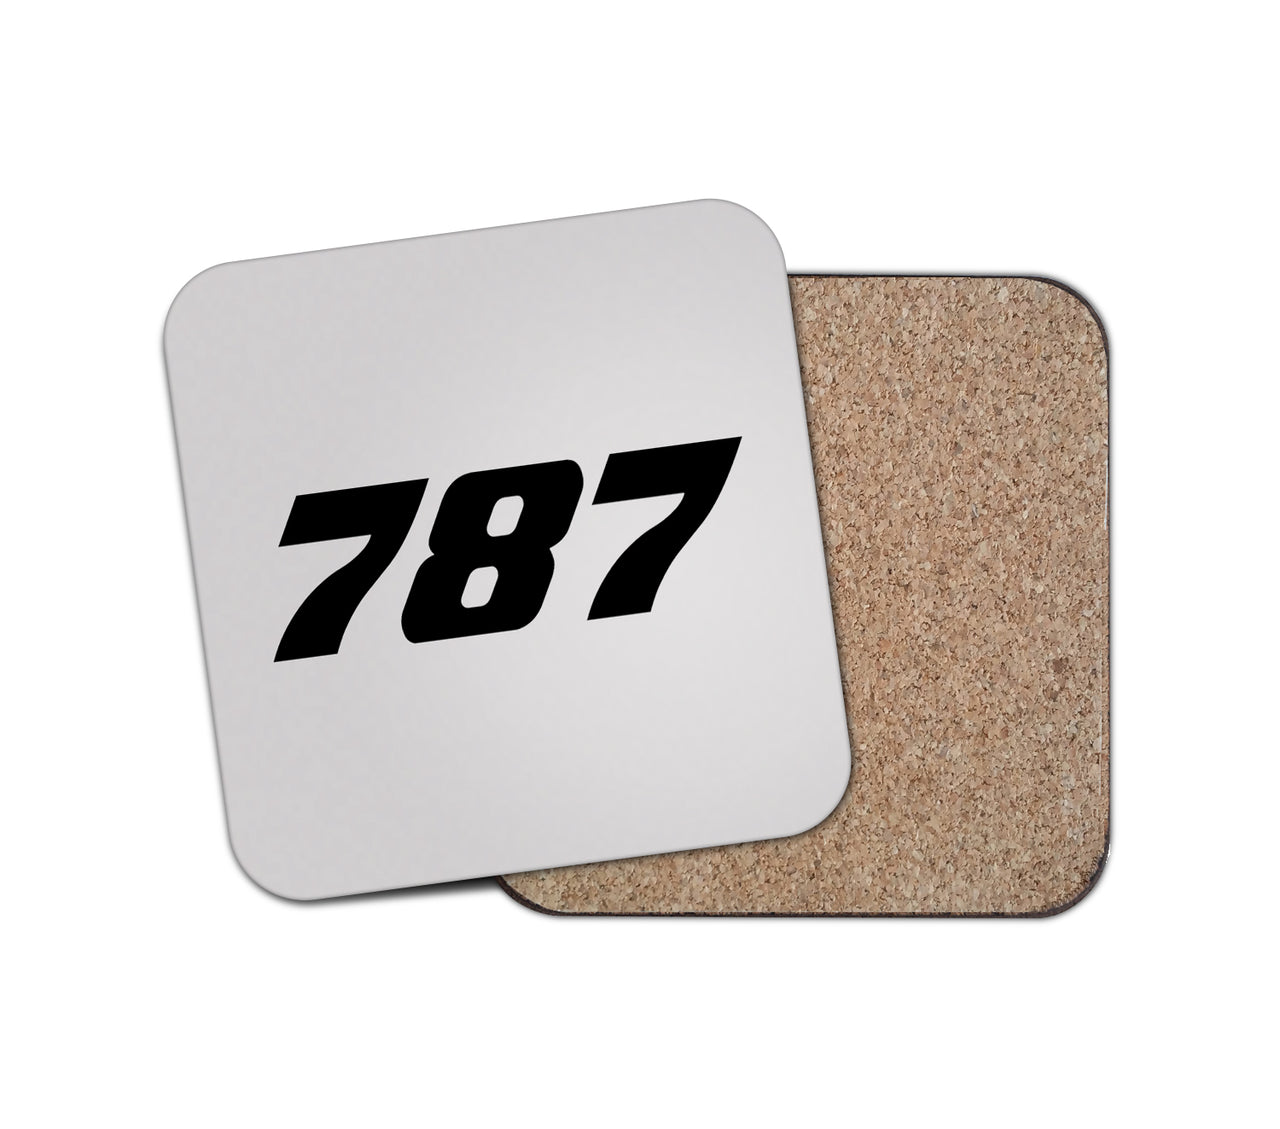 787 Flat Text Designed Coasters